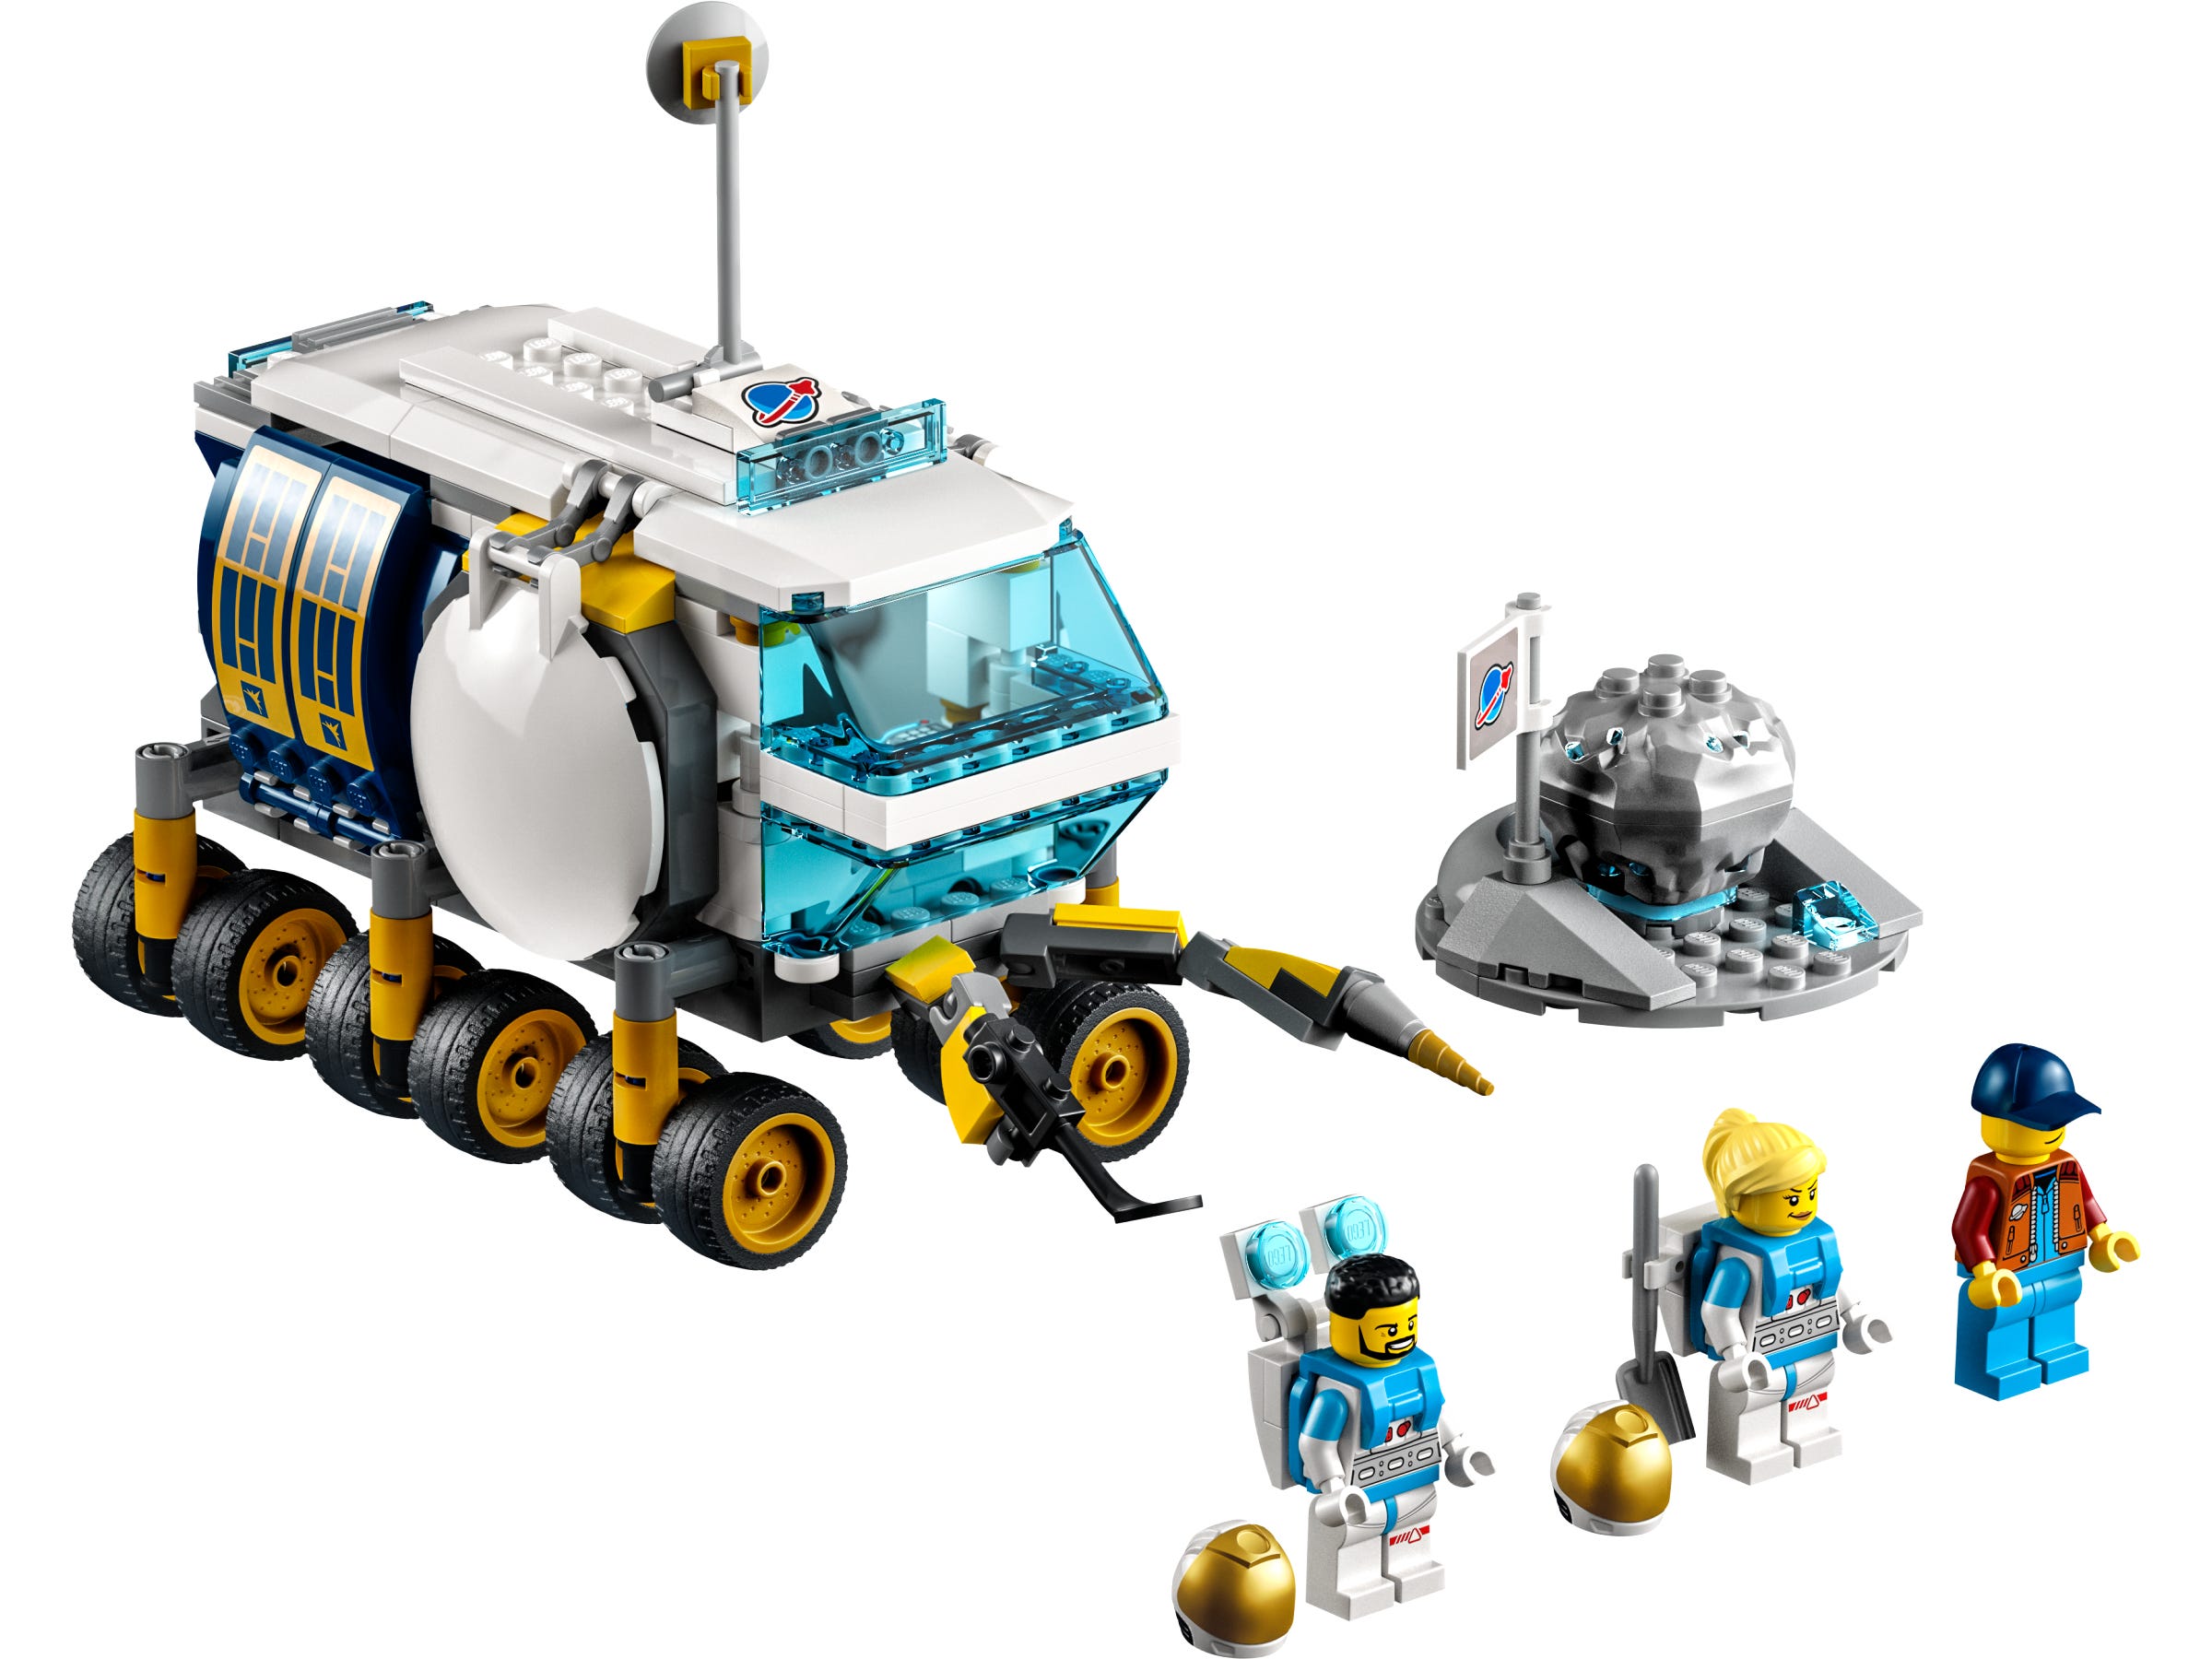 Lunar Roving Vehicle (673419359160 City) photo